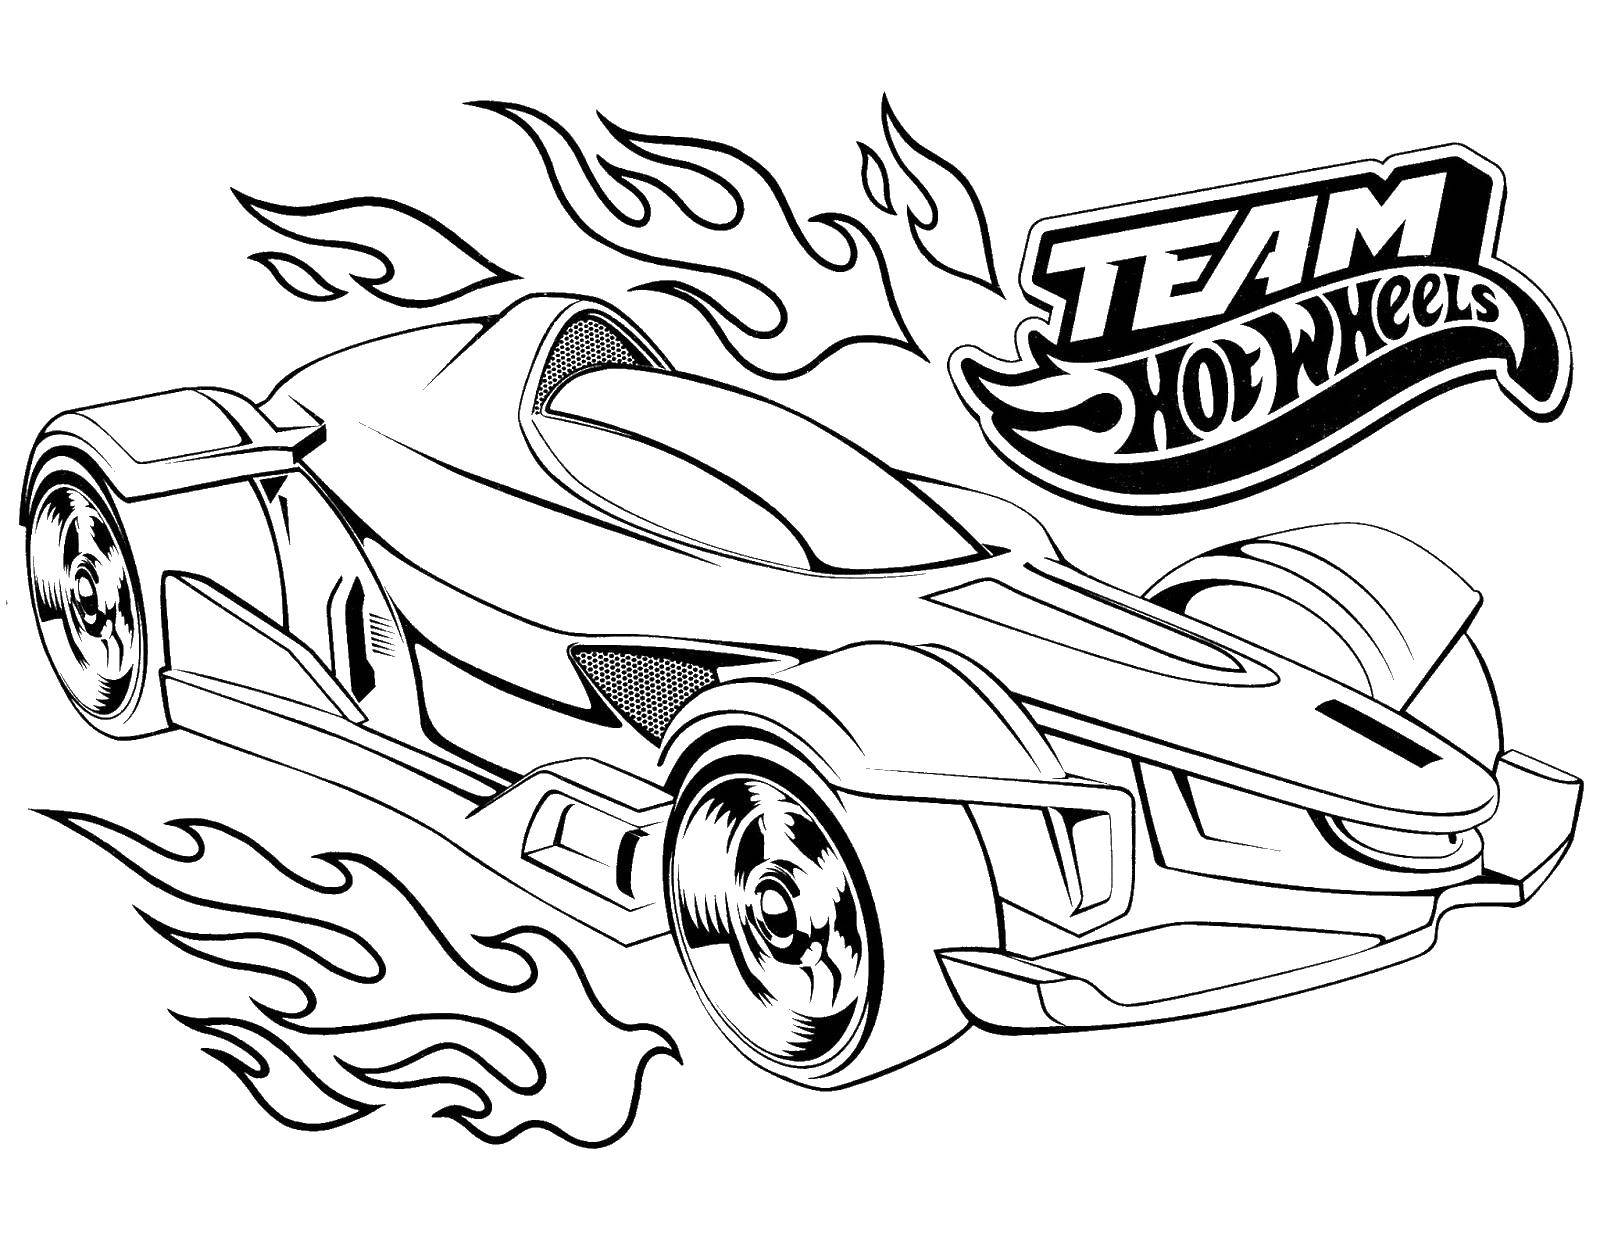 Coloring Race car print flame. Category Machine . Tags:  Car, racing.